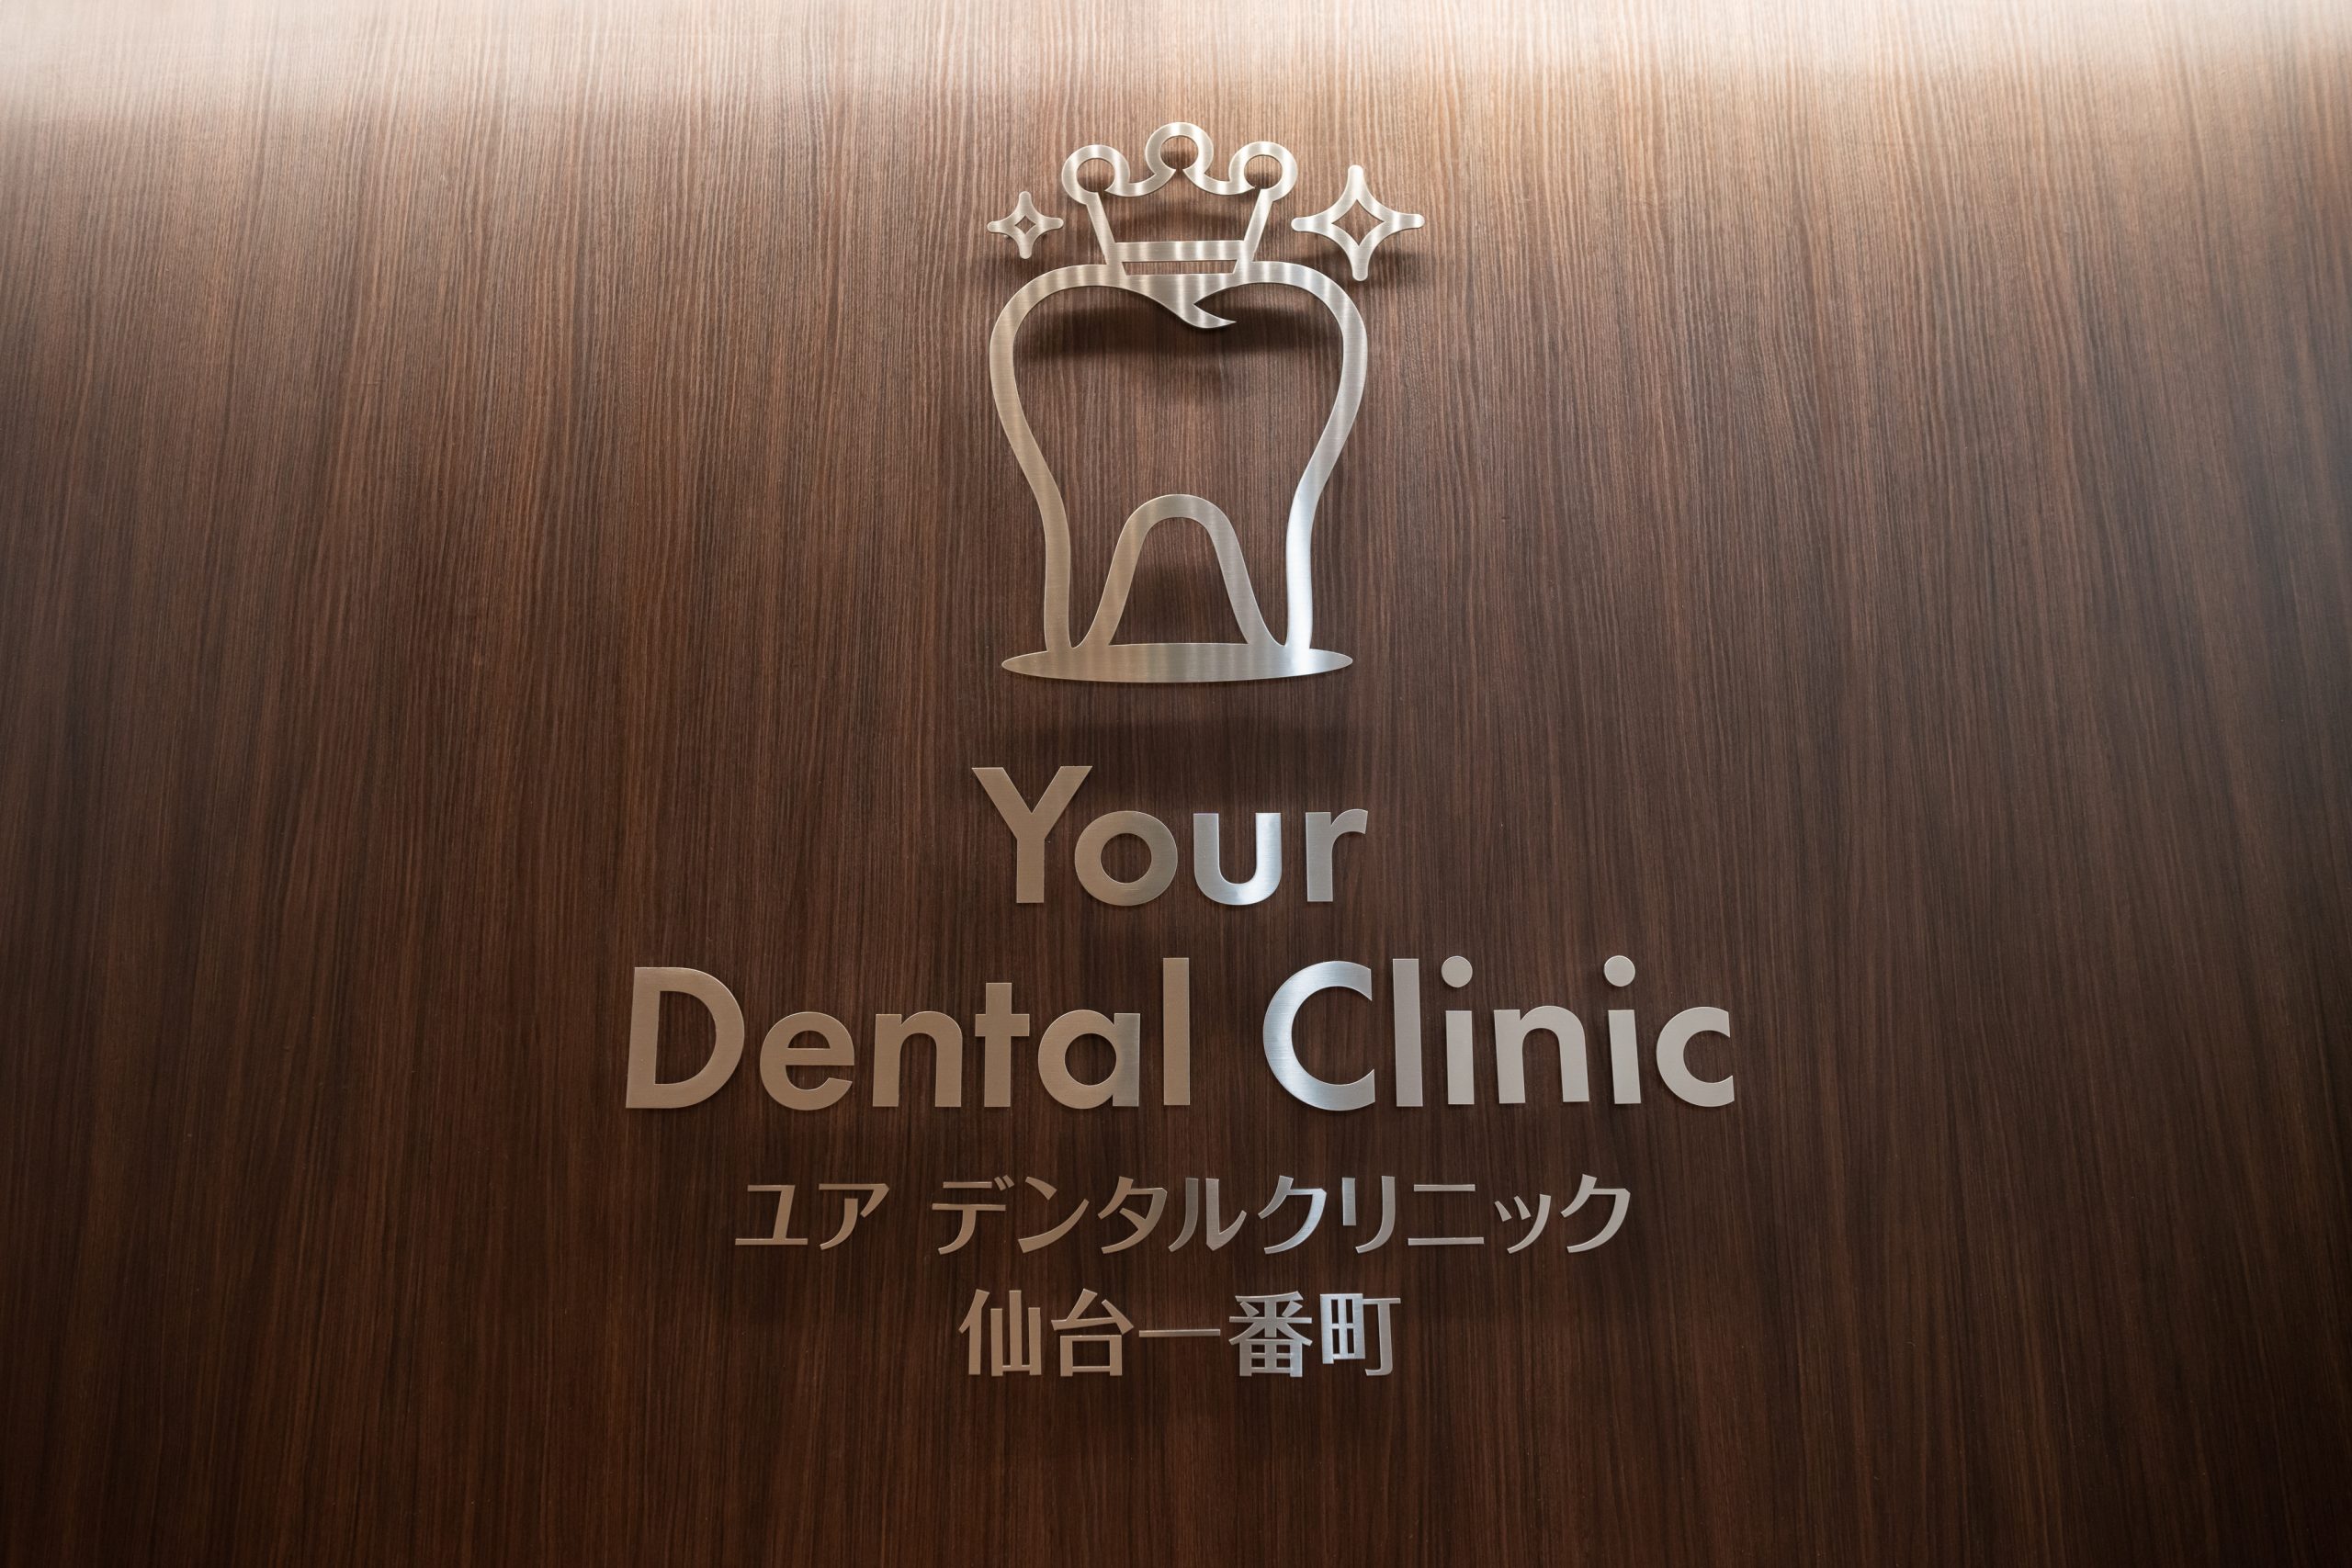 Your Dental Clinic 仙台一番町のコンセプト